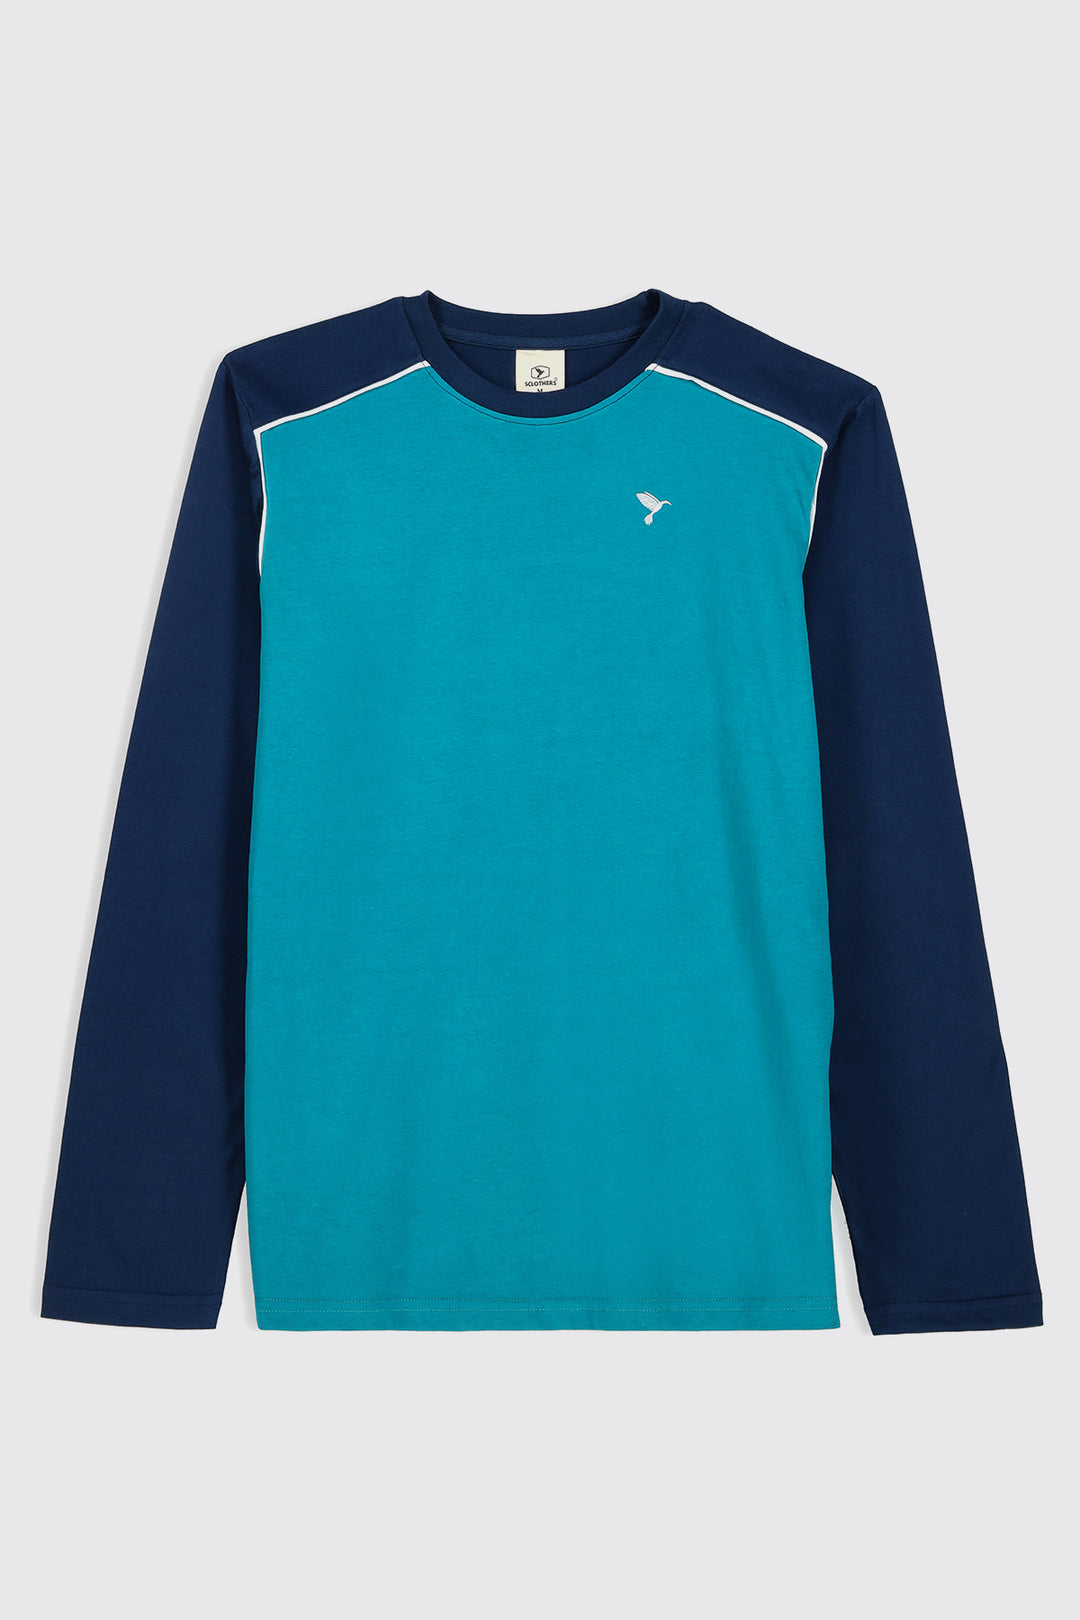 Aqua Green & Blue Paneled Embroidered T-Shirt - W23 - MT0278R